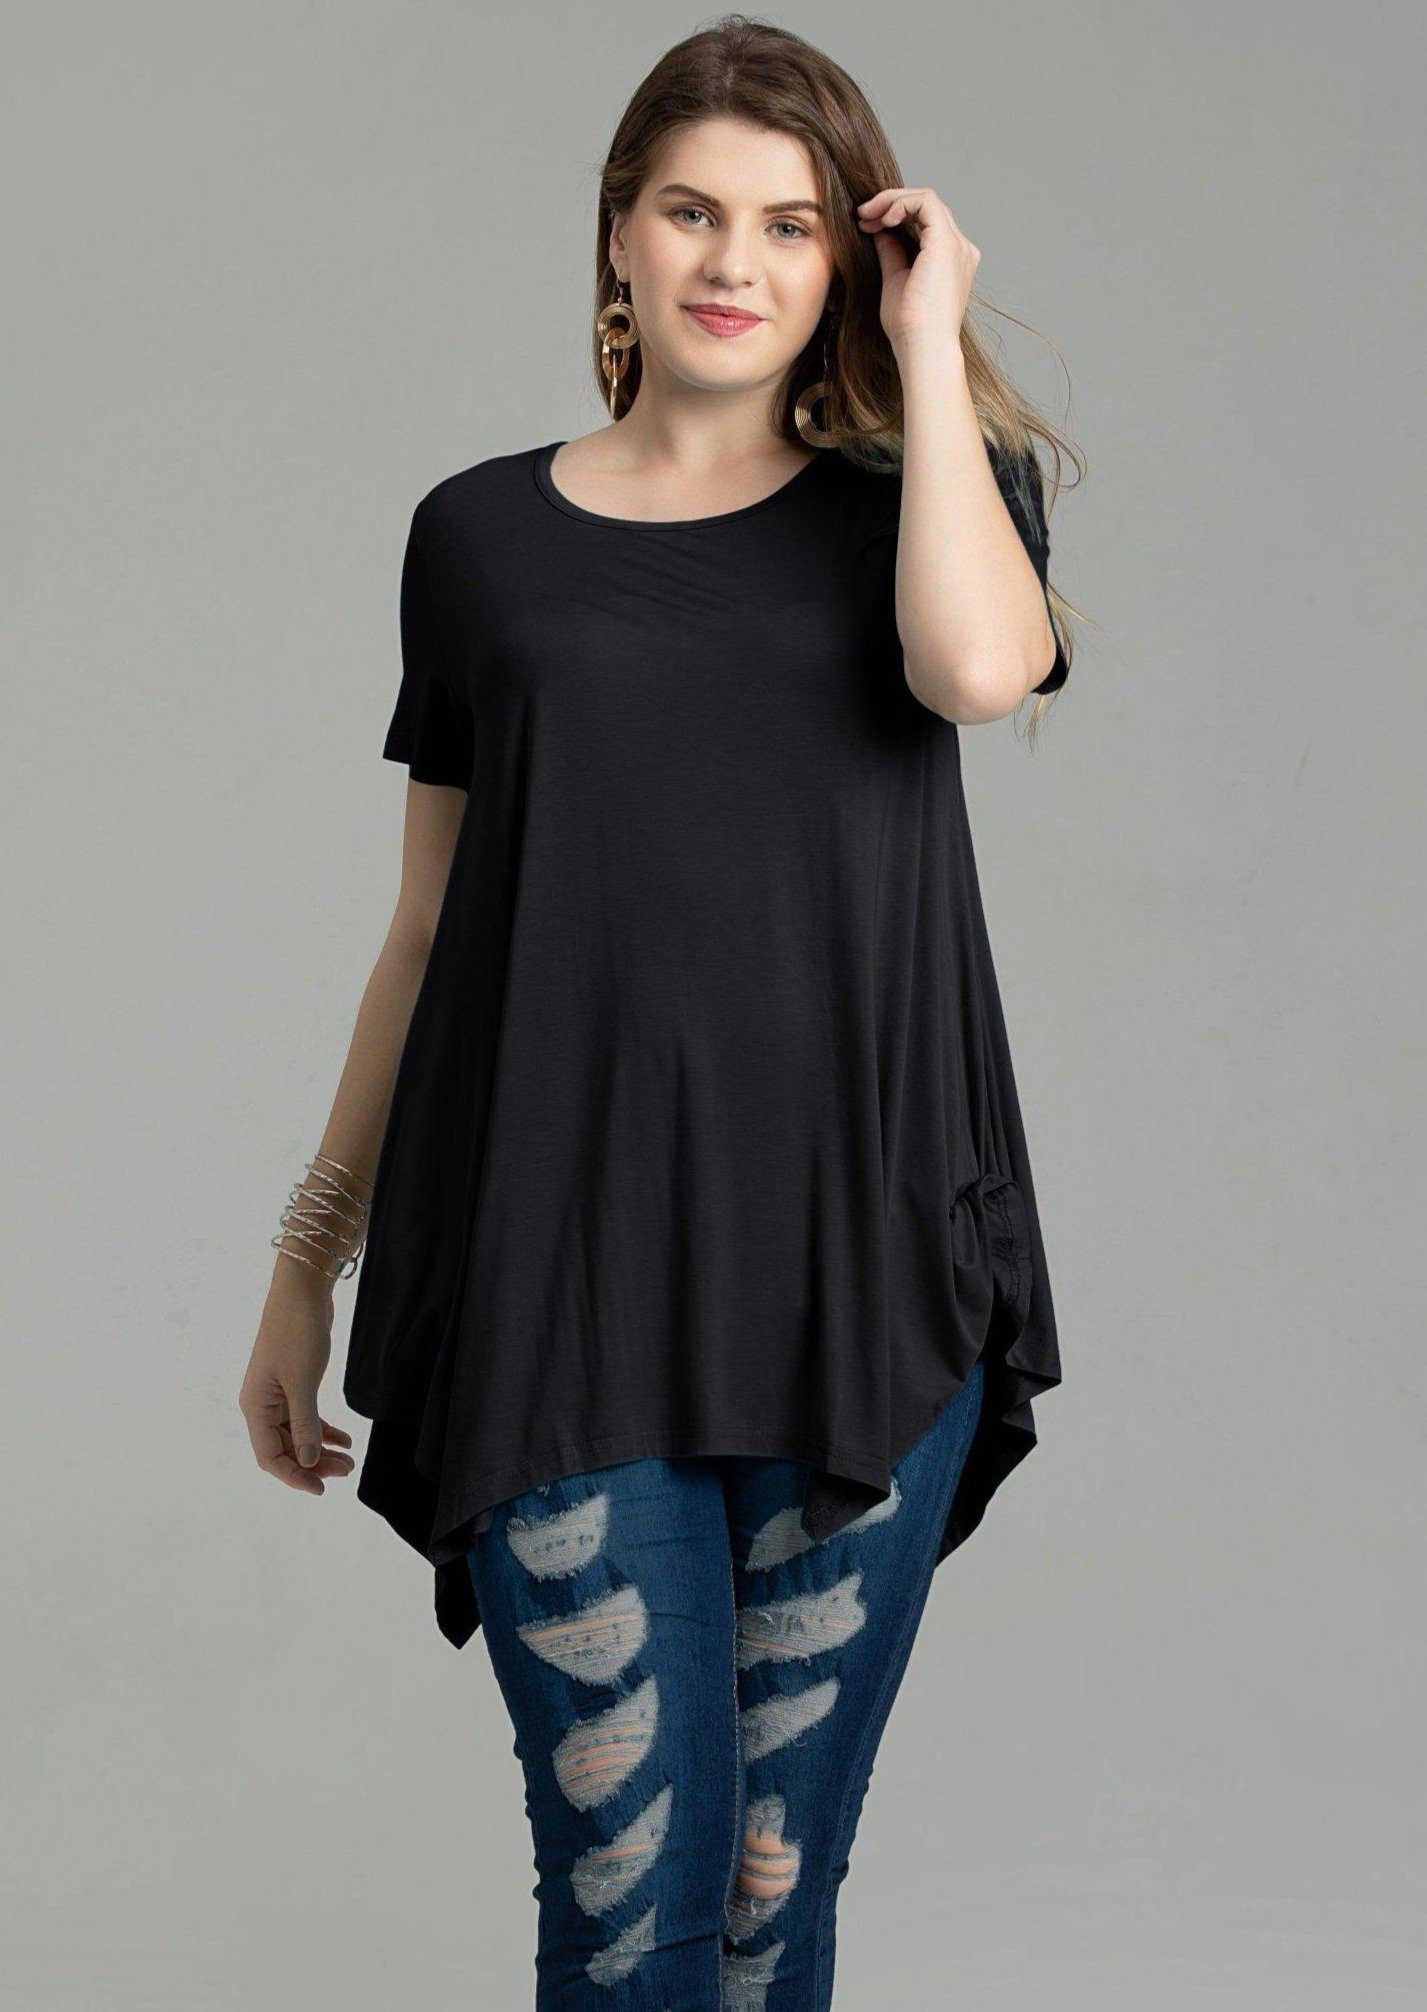 LARACE Short Sleeve Flattering Comfy Blouse Shirt Tops-8026 - black / 1X